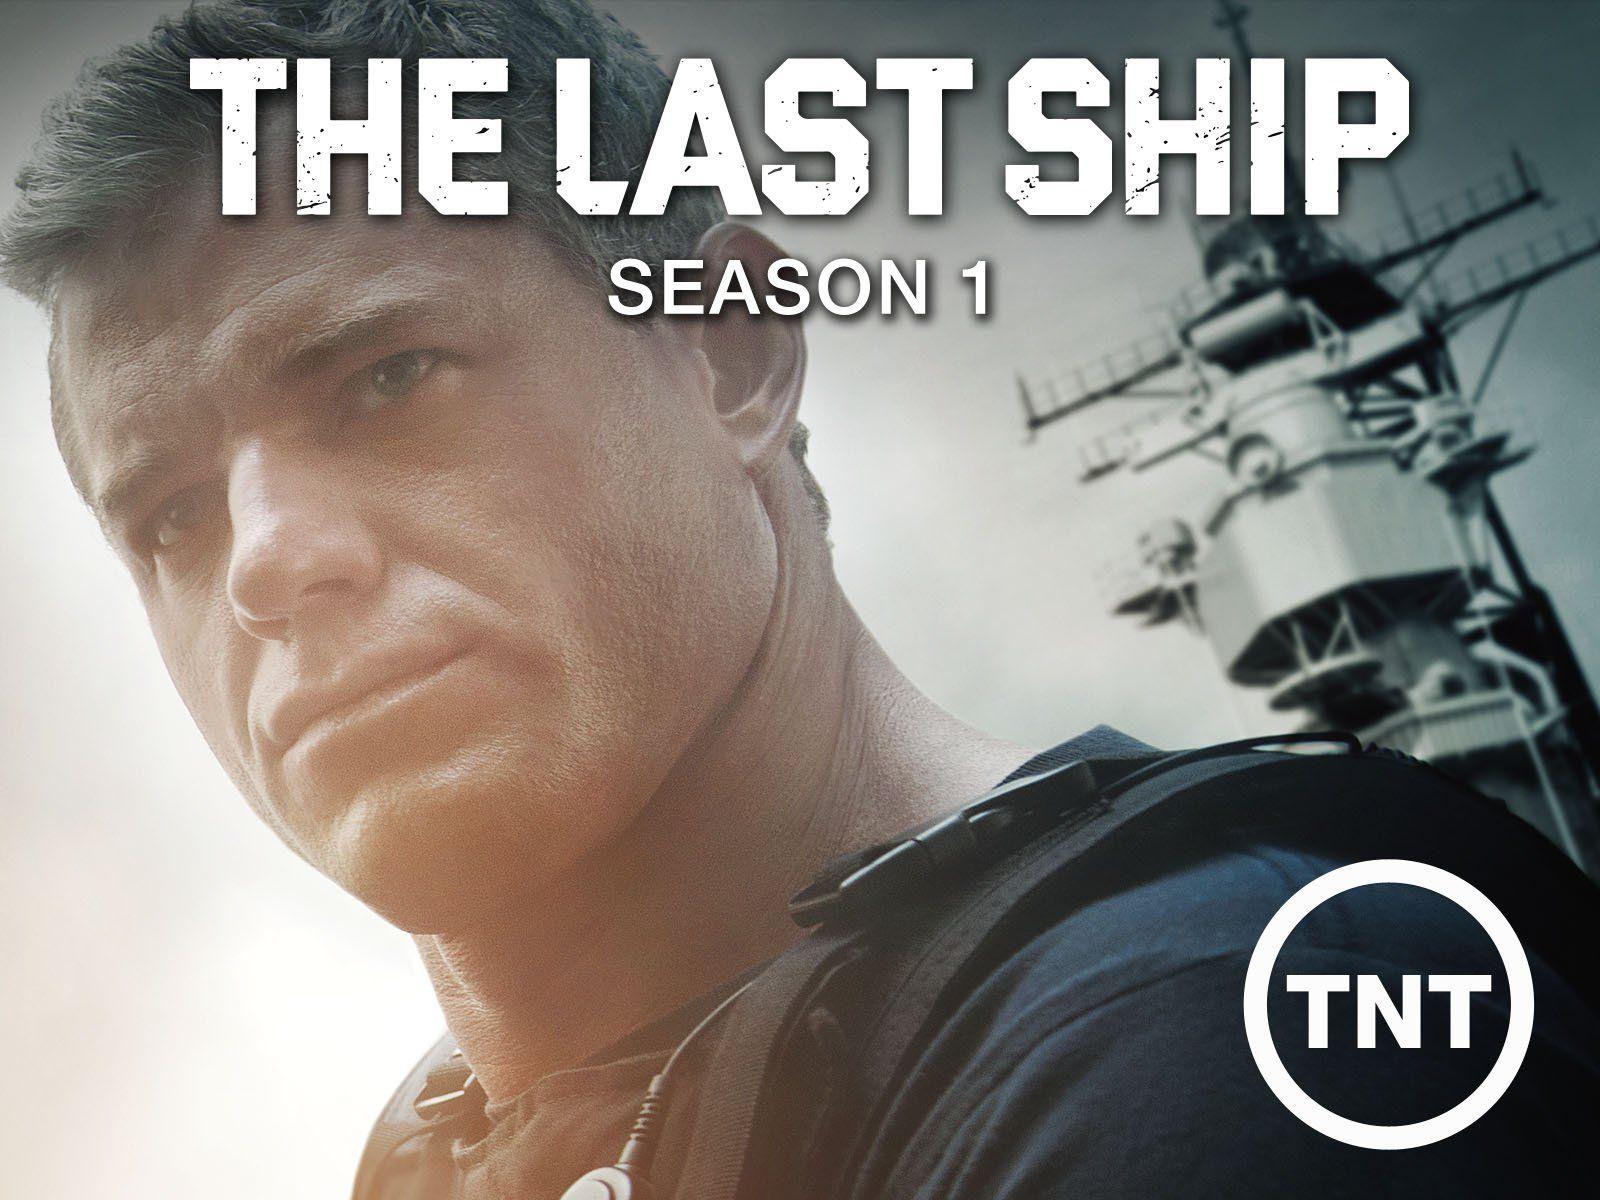 The Last Ship Season 1: Amazon Digital Services LLC